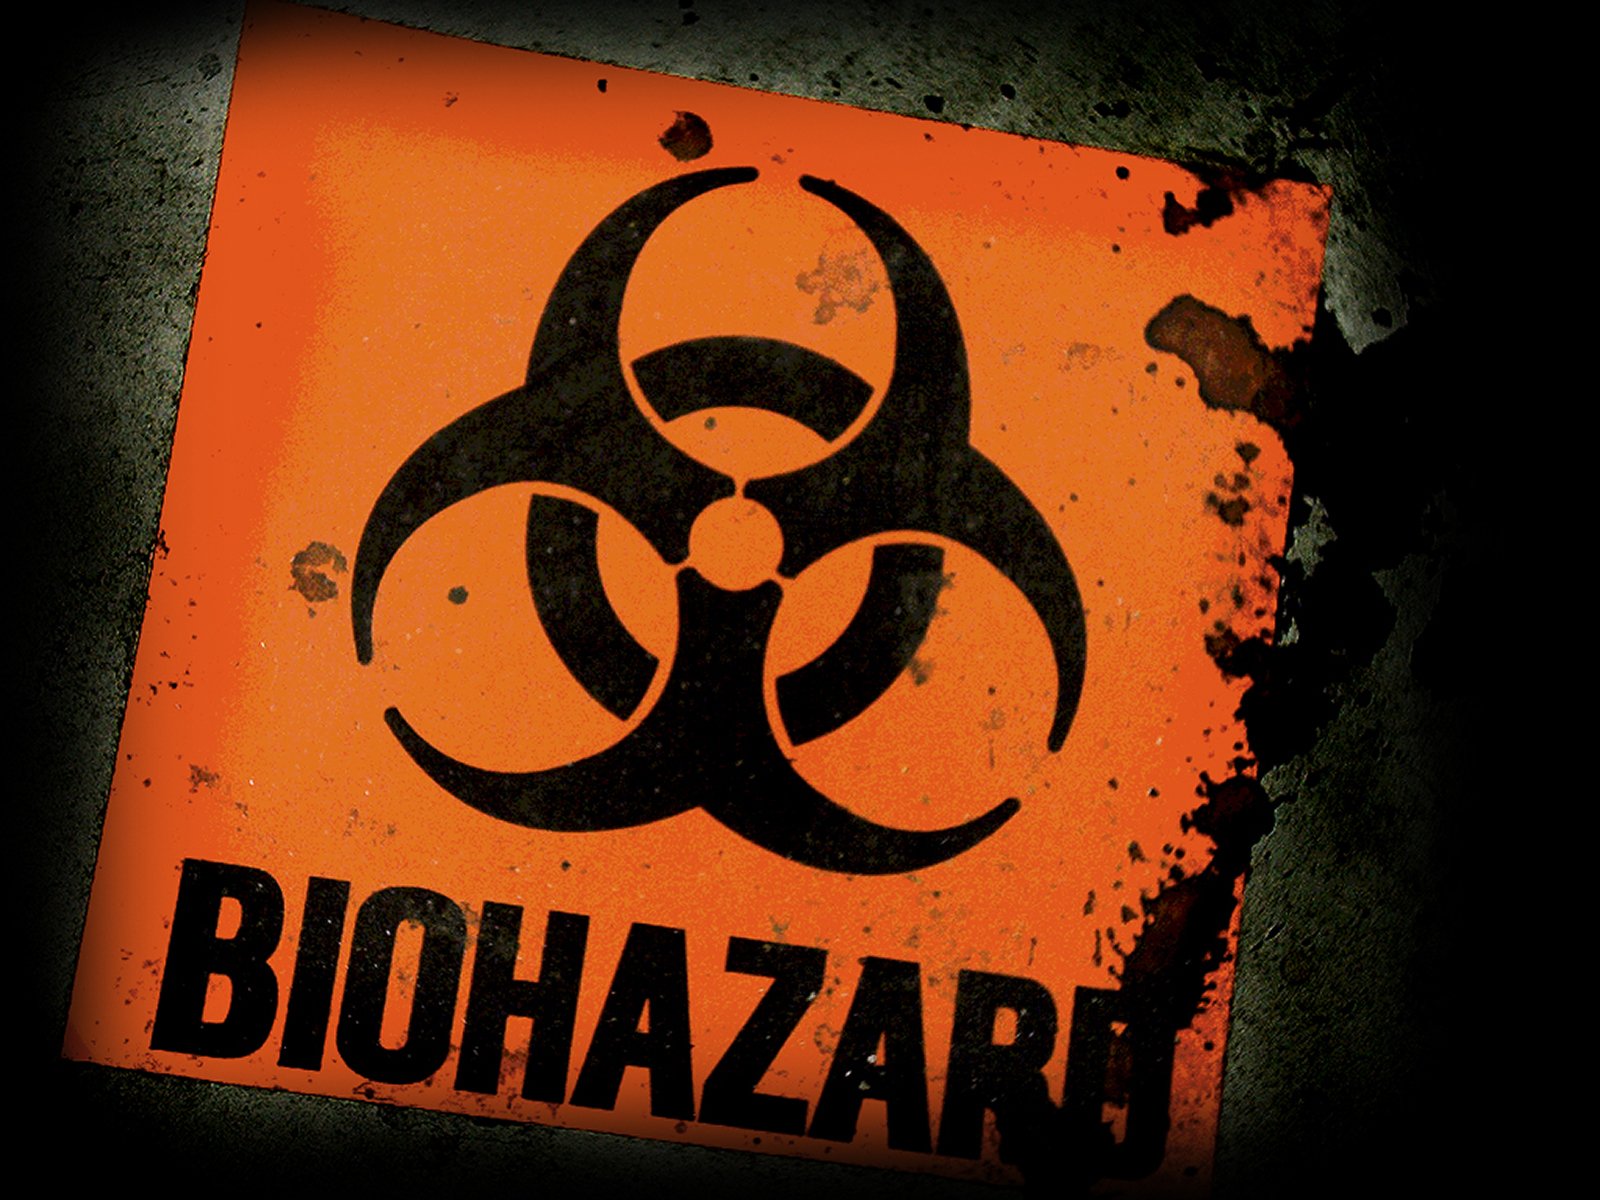 Sci Fi Biohazard Wallpaper and Background Imagex1200